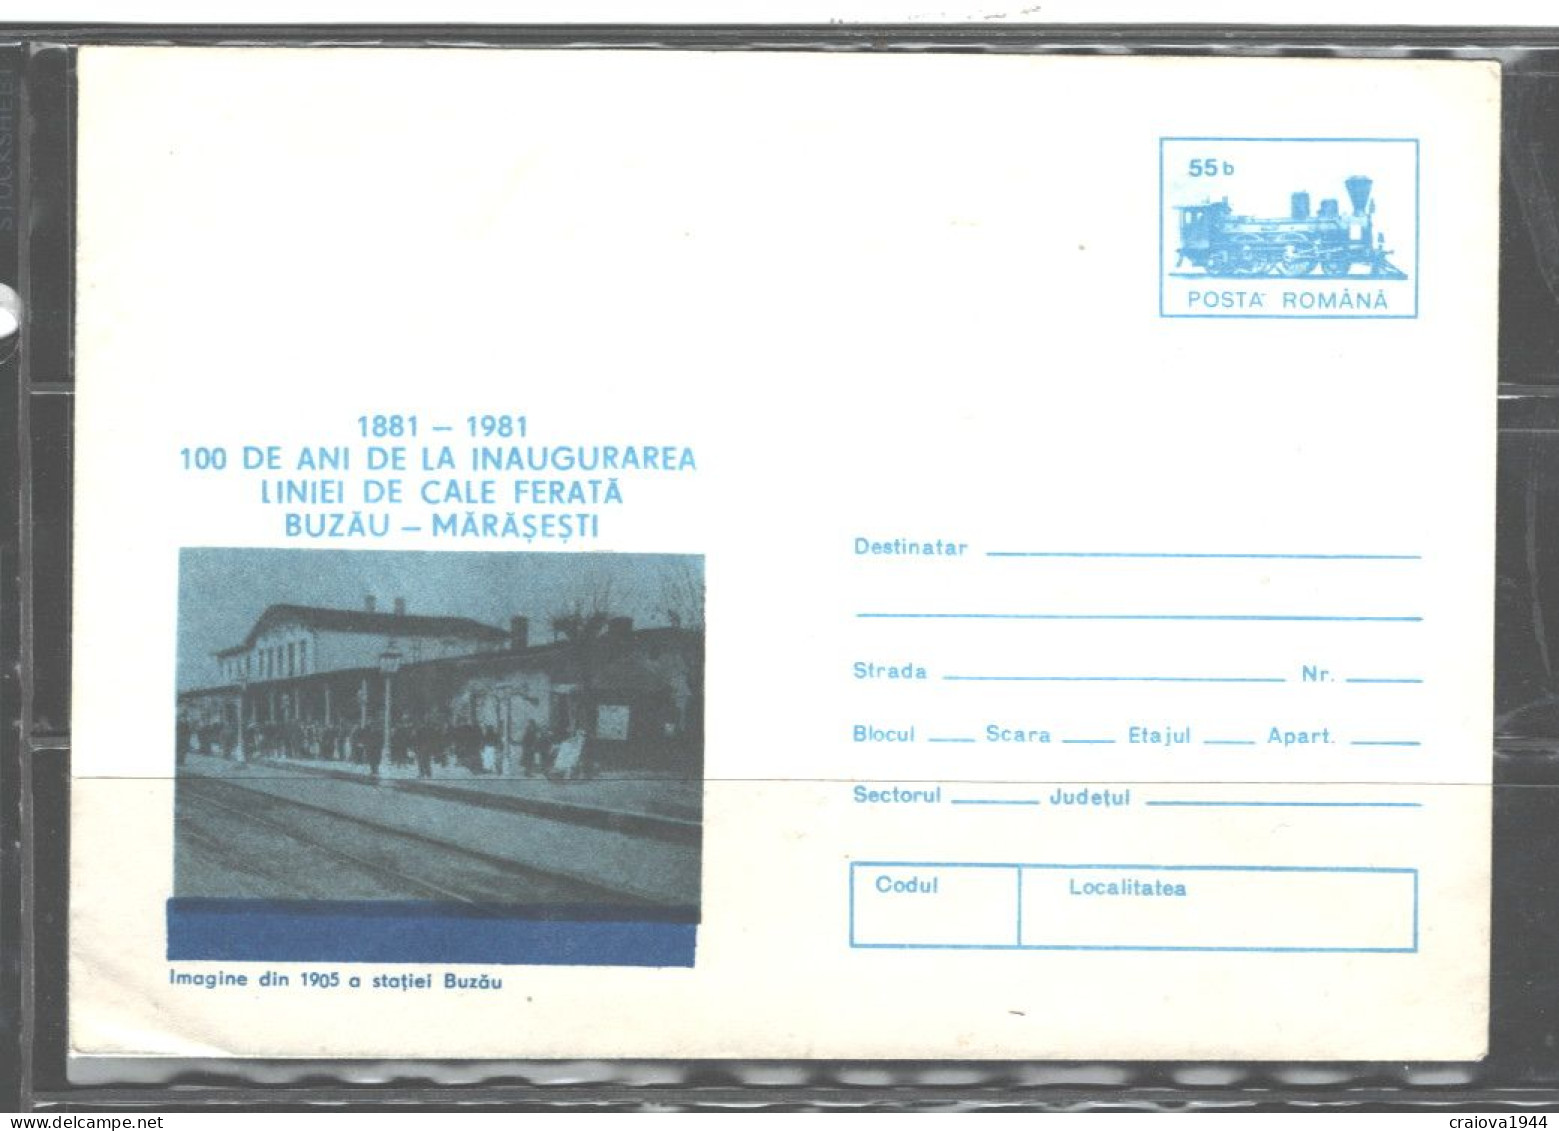 ROMANIA, 1881-1981 100th ANNIV. RAILWAY "BUZAU-MARASESTI PREPAID COVER - Covers & Documents